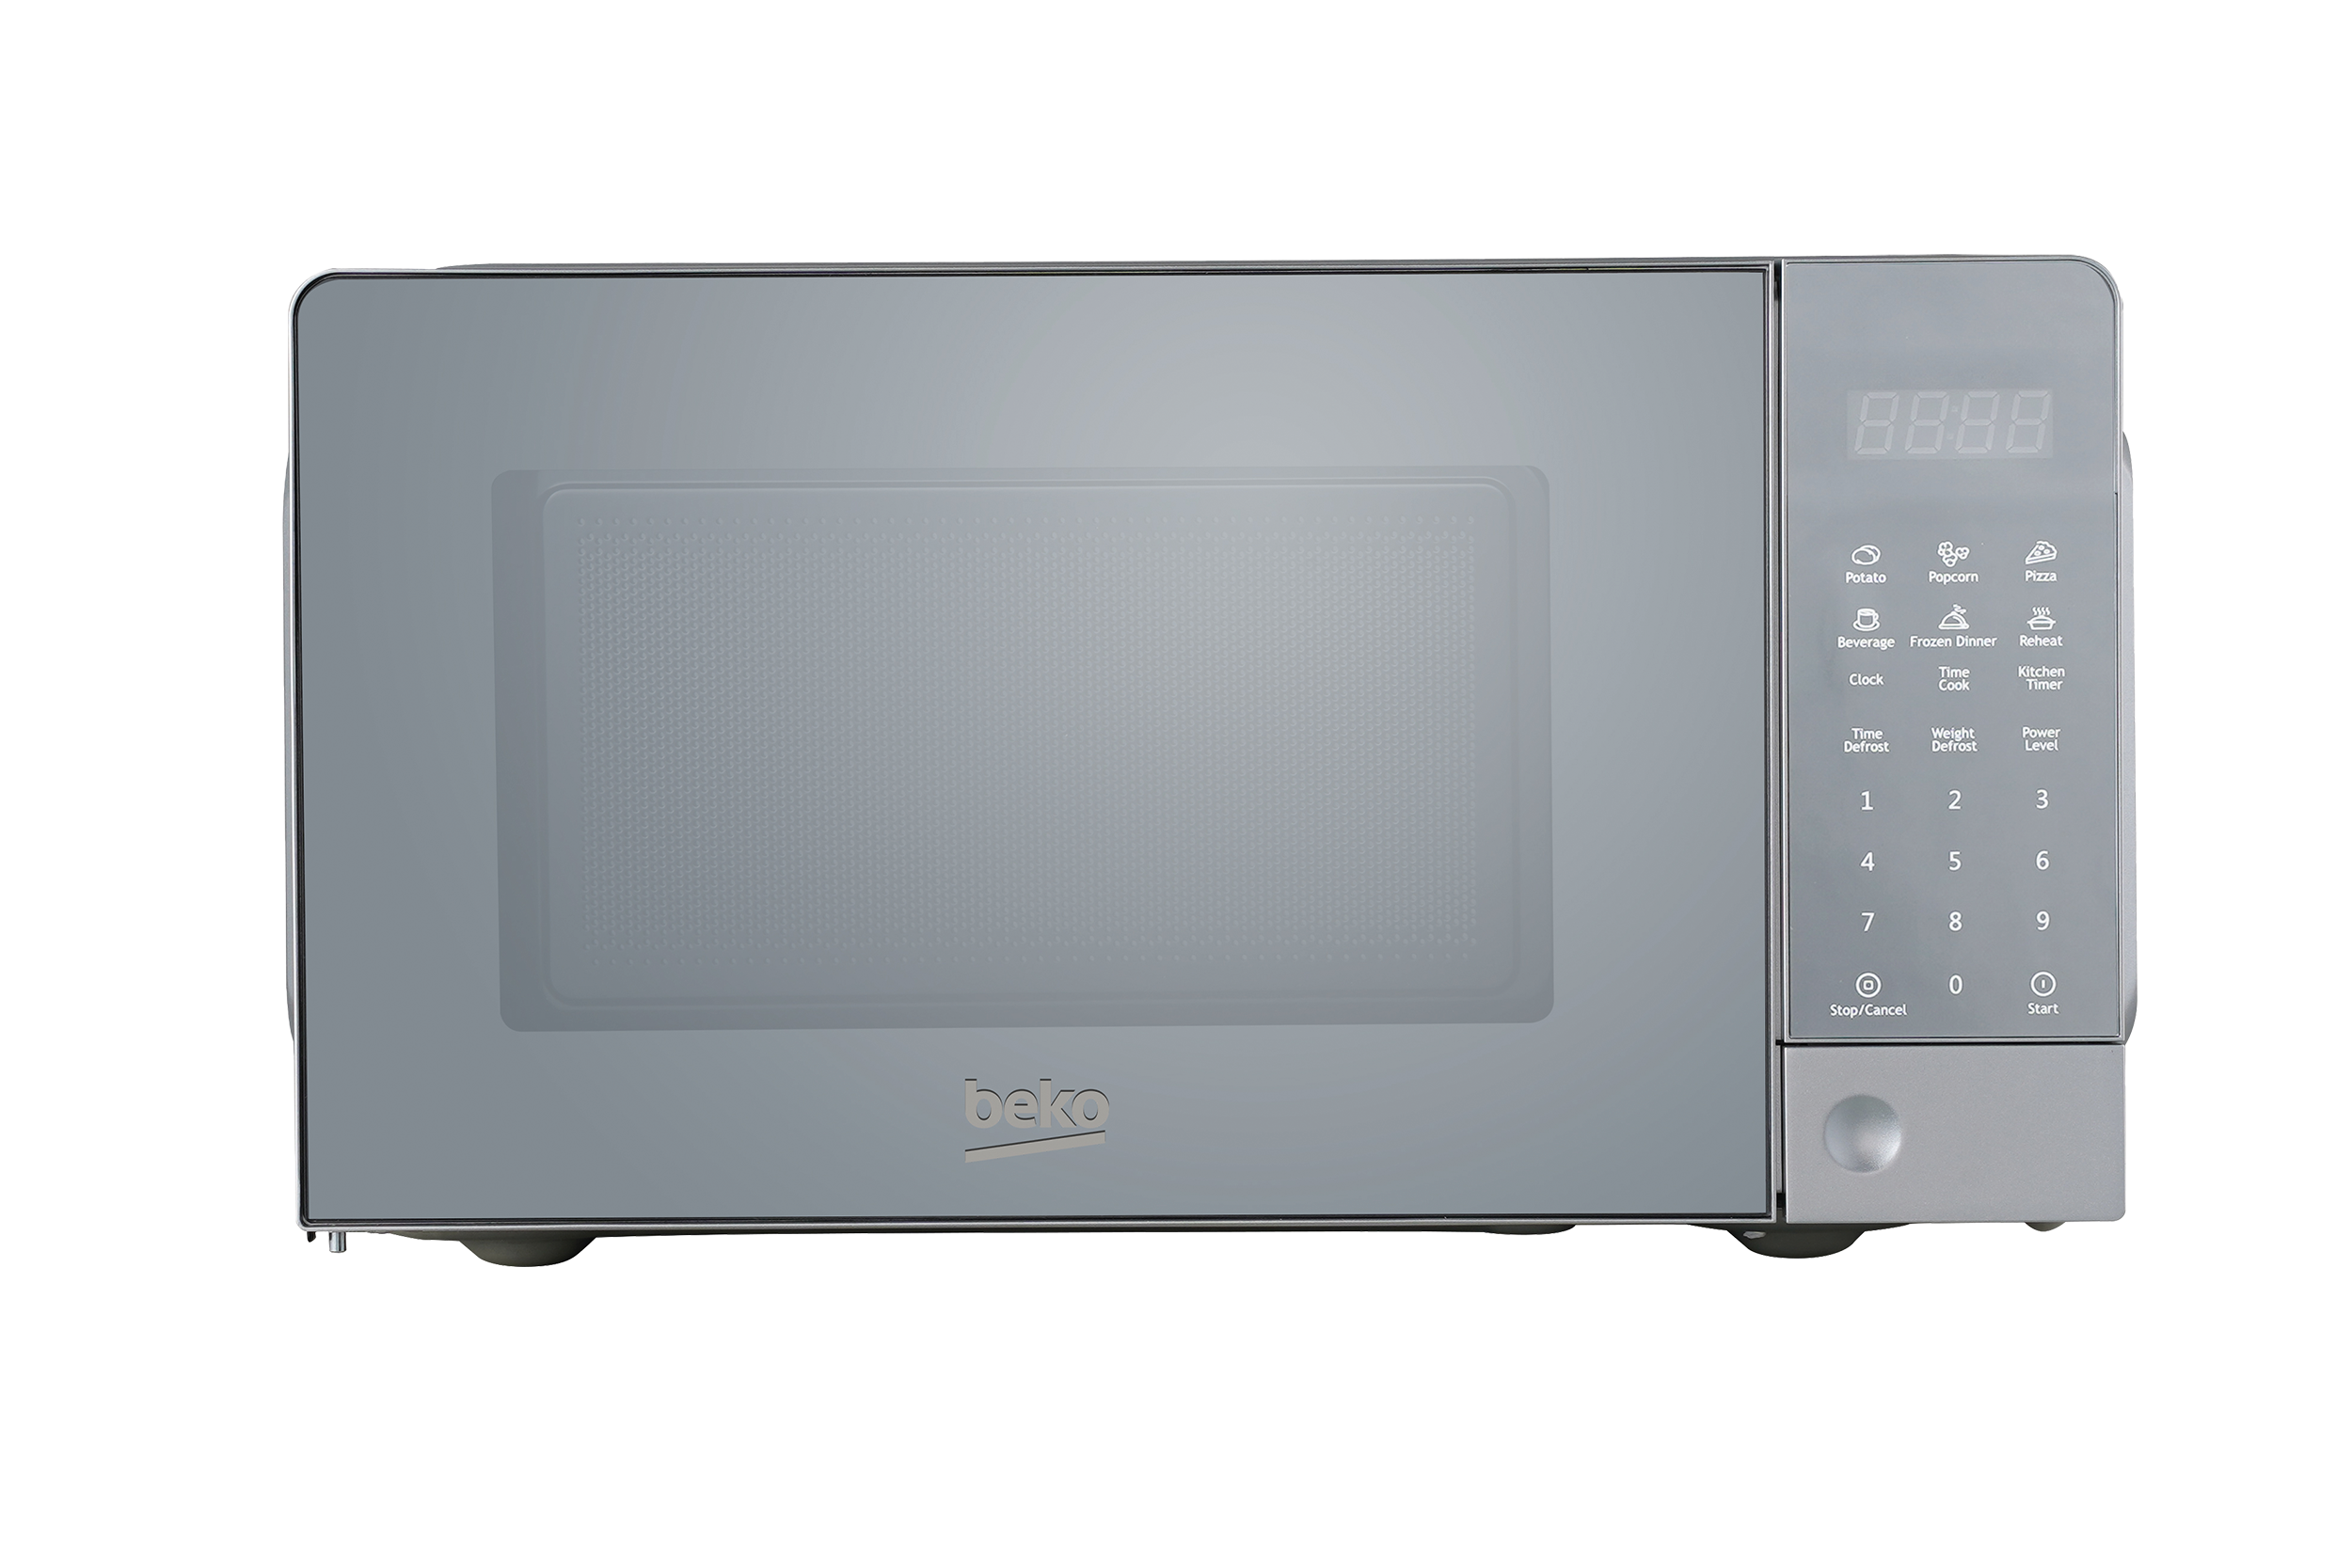 Beko 20L Solo Microwave Oven - Silver